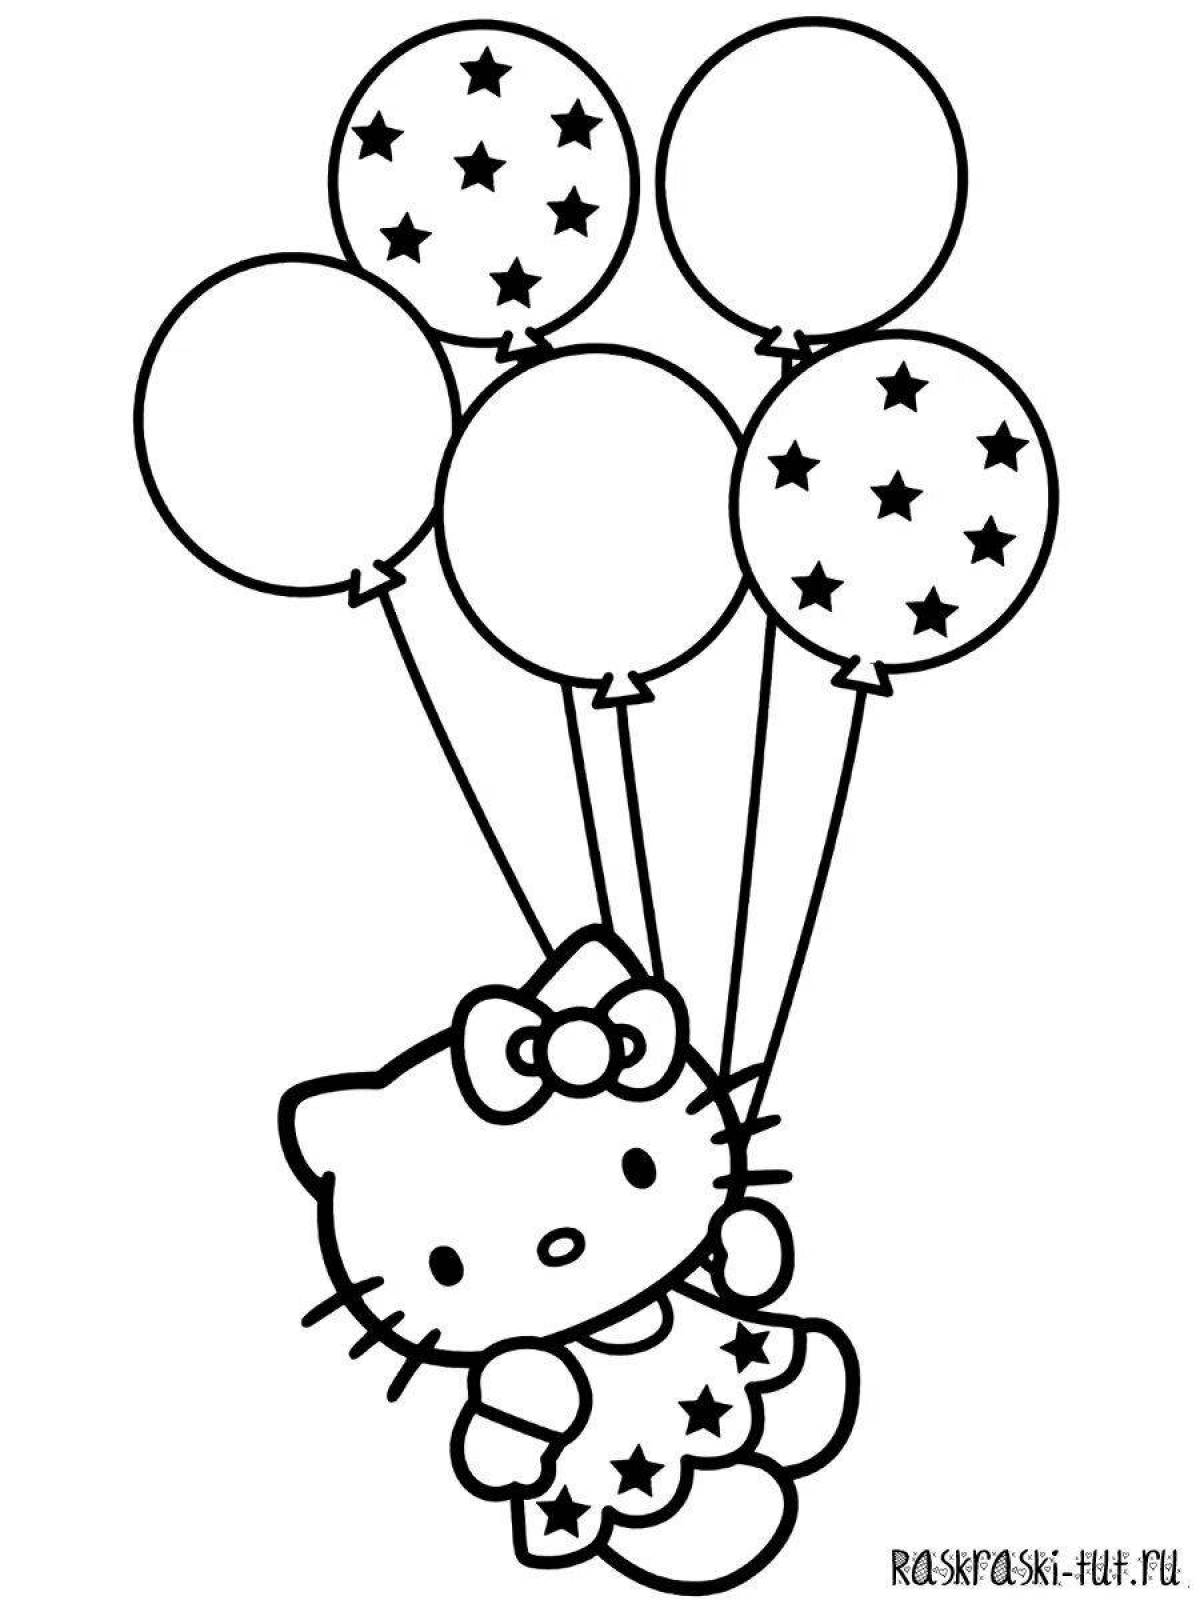 Fluttering balloons for children 2-3 years old